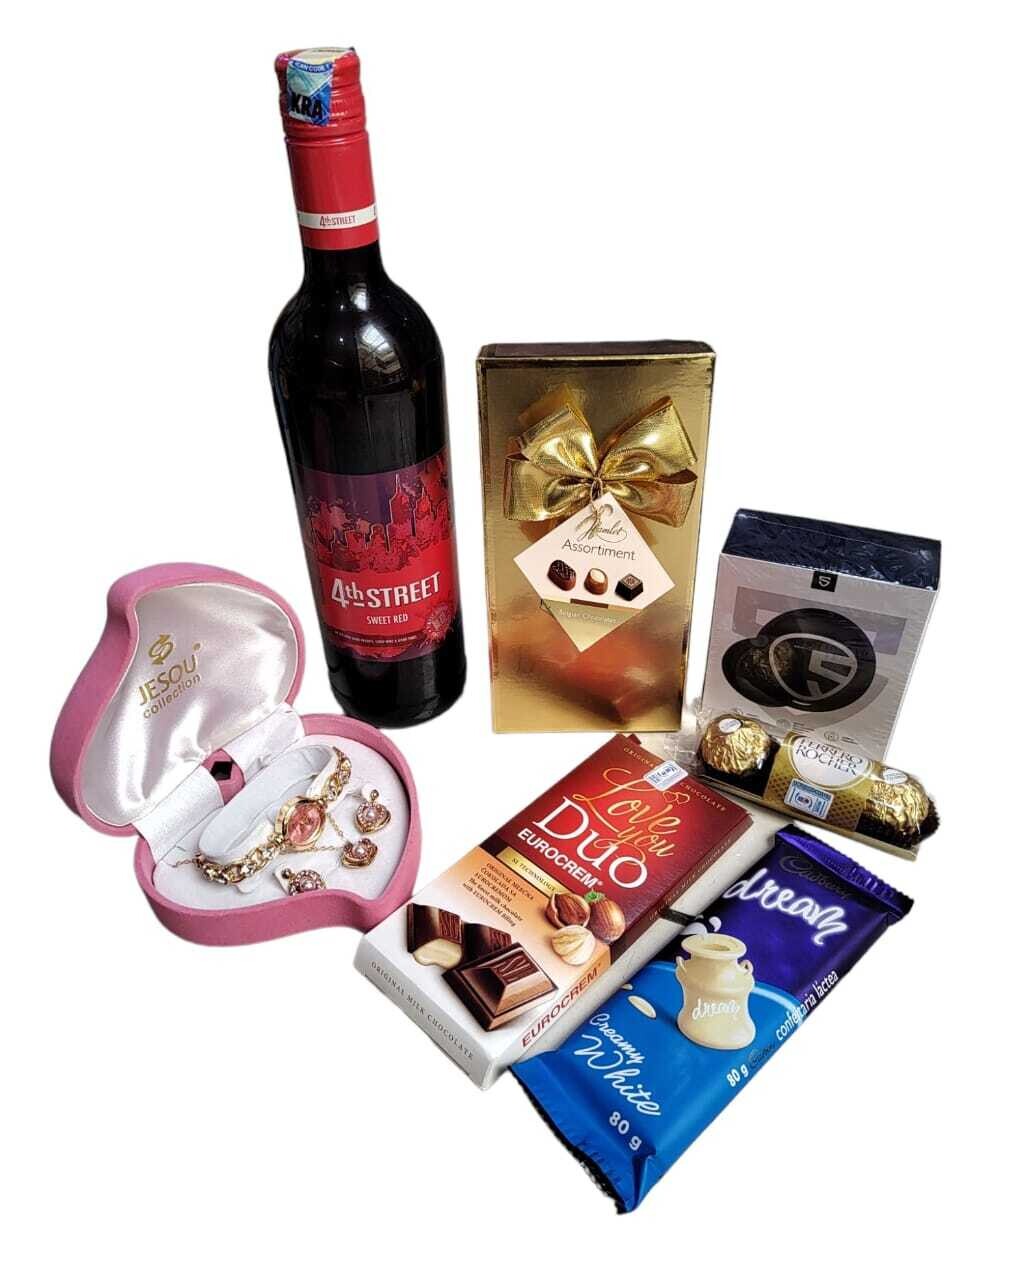 Beautiful ladies giftset, assorted chocolates, earbuds & wine